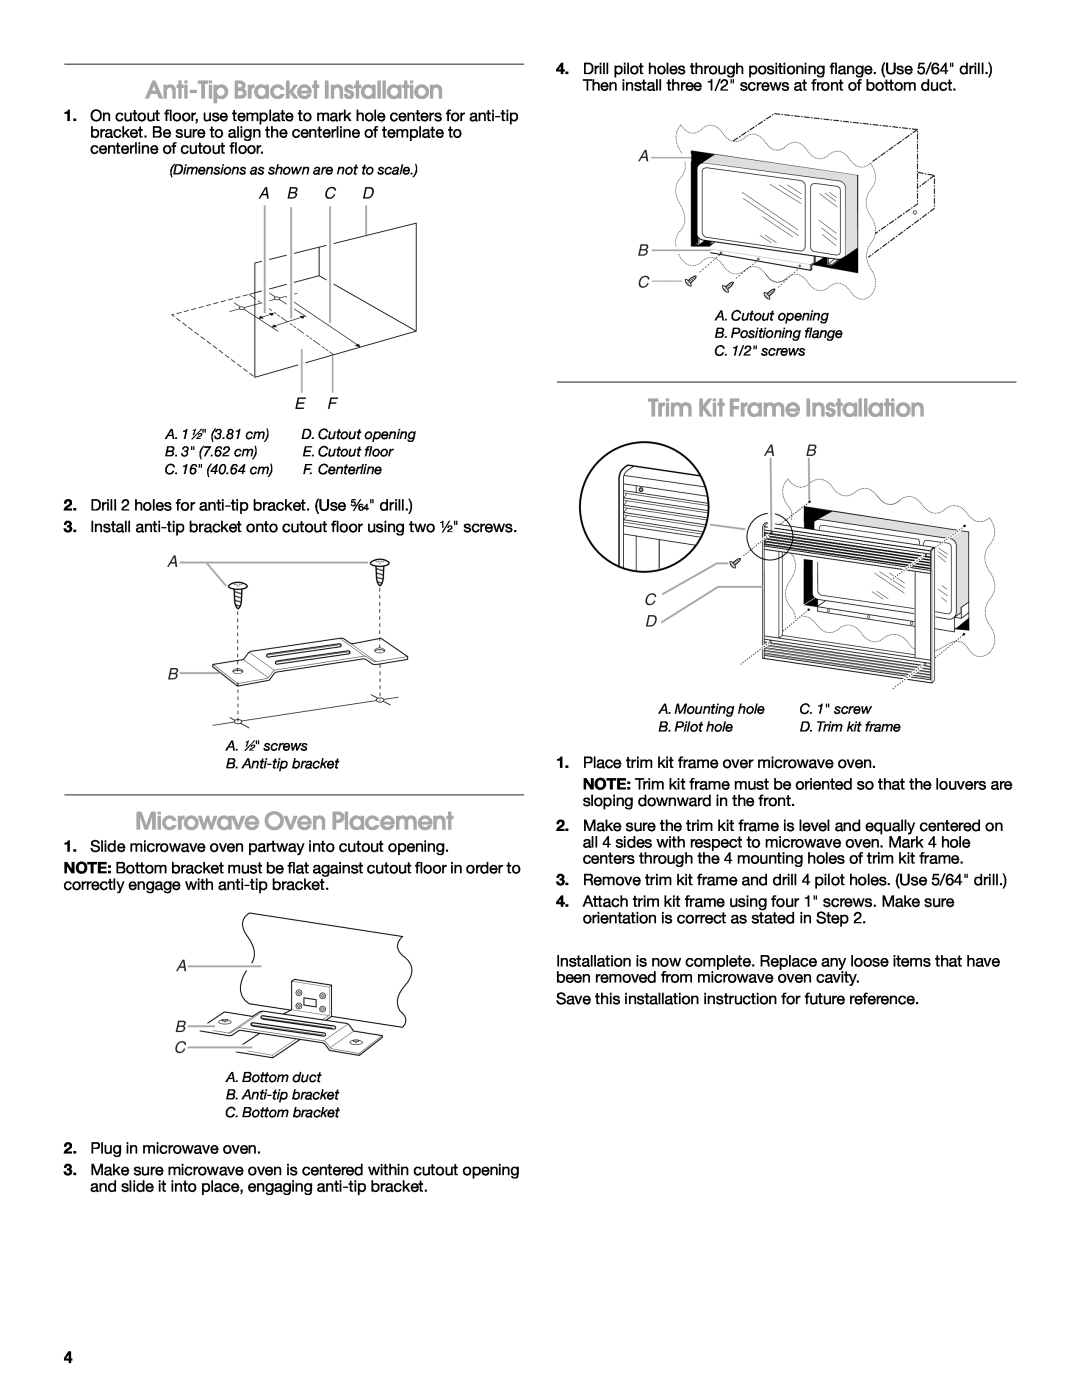 Whirlpool MK1154XV, MK1157XV Anti-Tip Bracket Installation, Microwave Oven Placement, Trim Kit Frame Installation, A B C D 